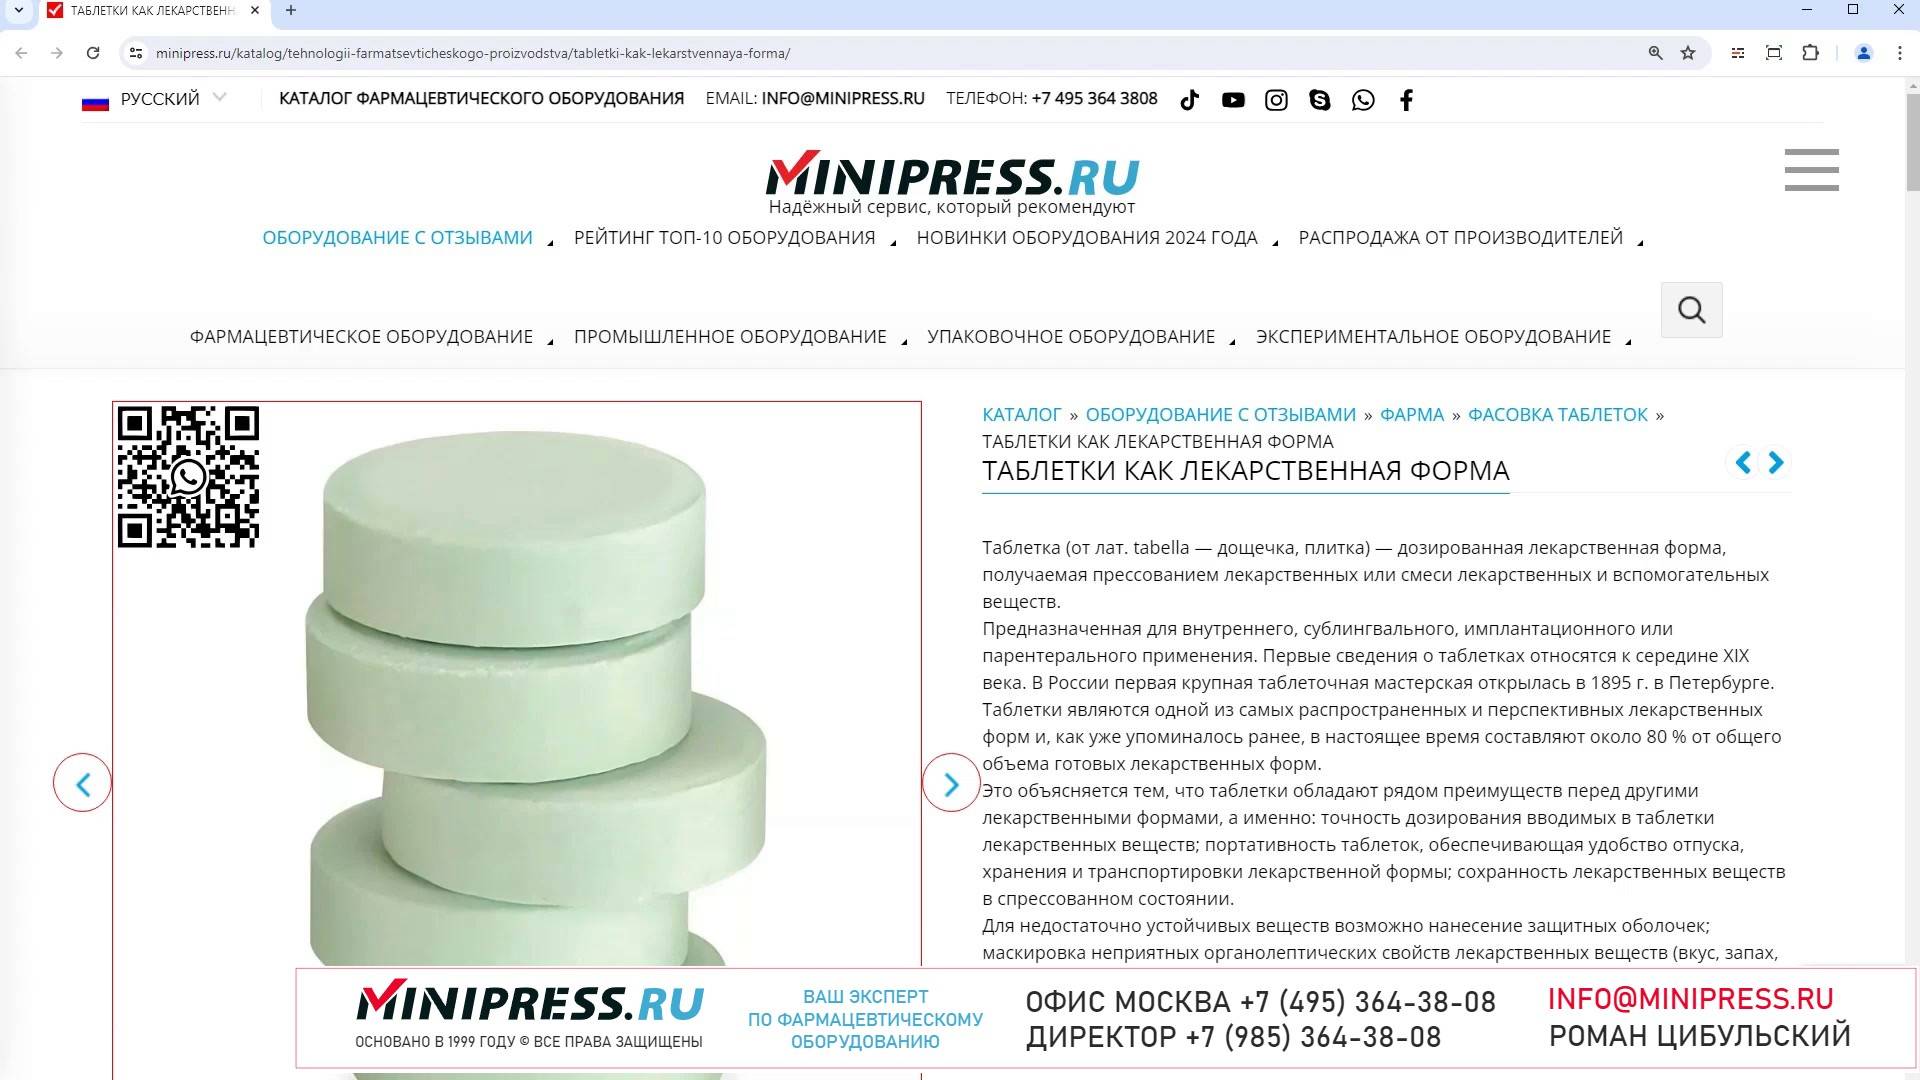 Minipress.ru Таблетки как лекарственная форма